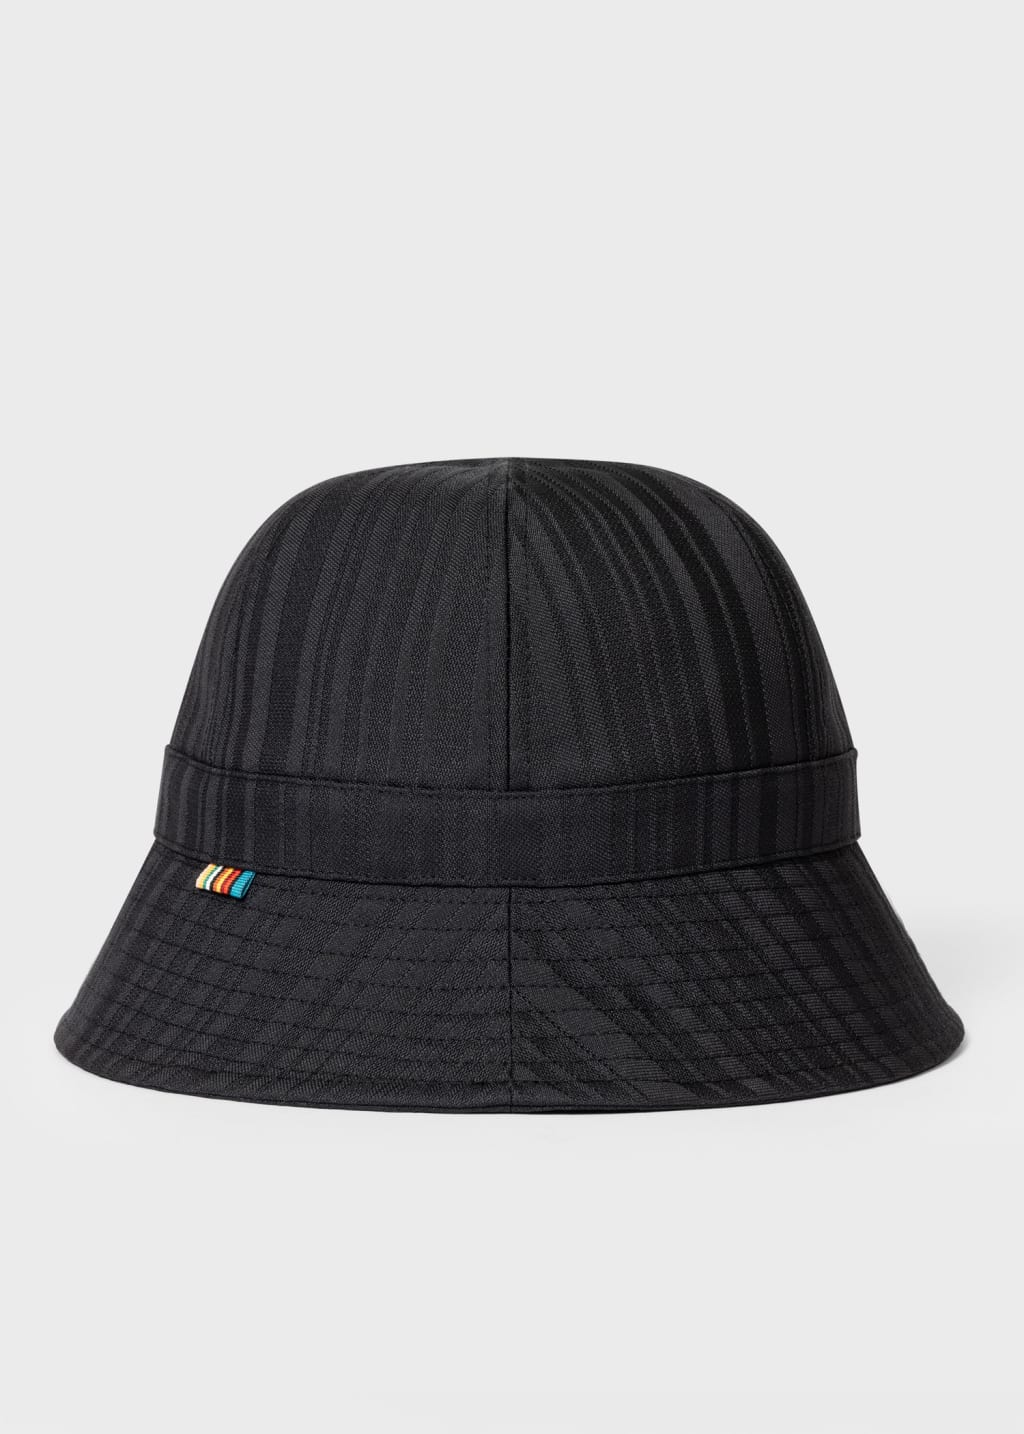 Front View - Black 'Shadow Stripe' Bucket Hat Paul Smith